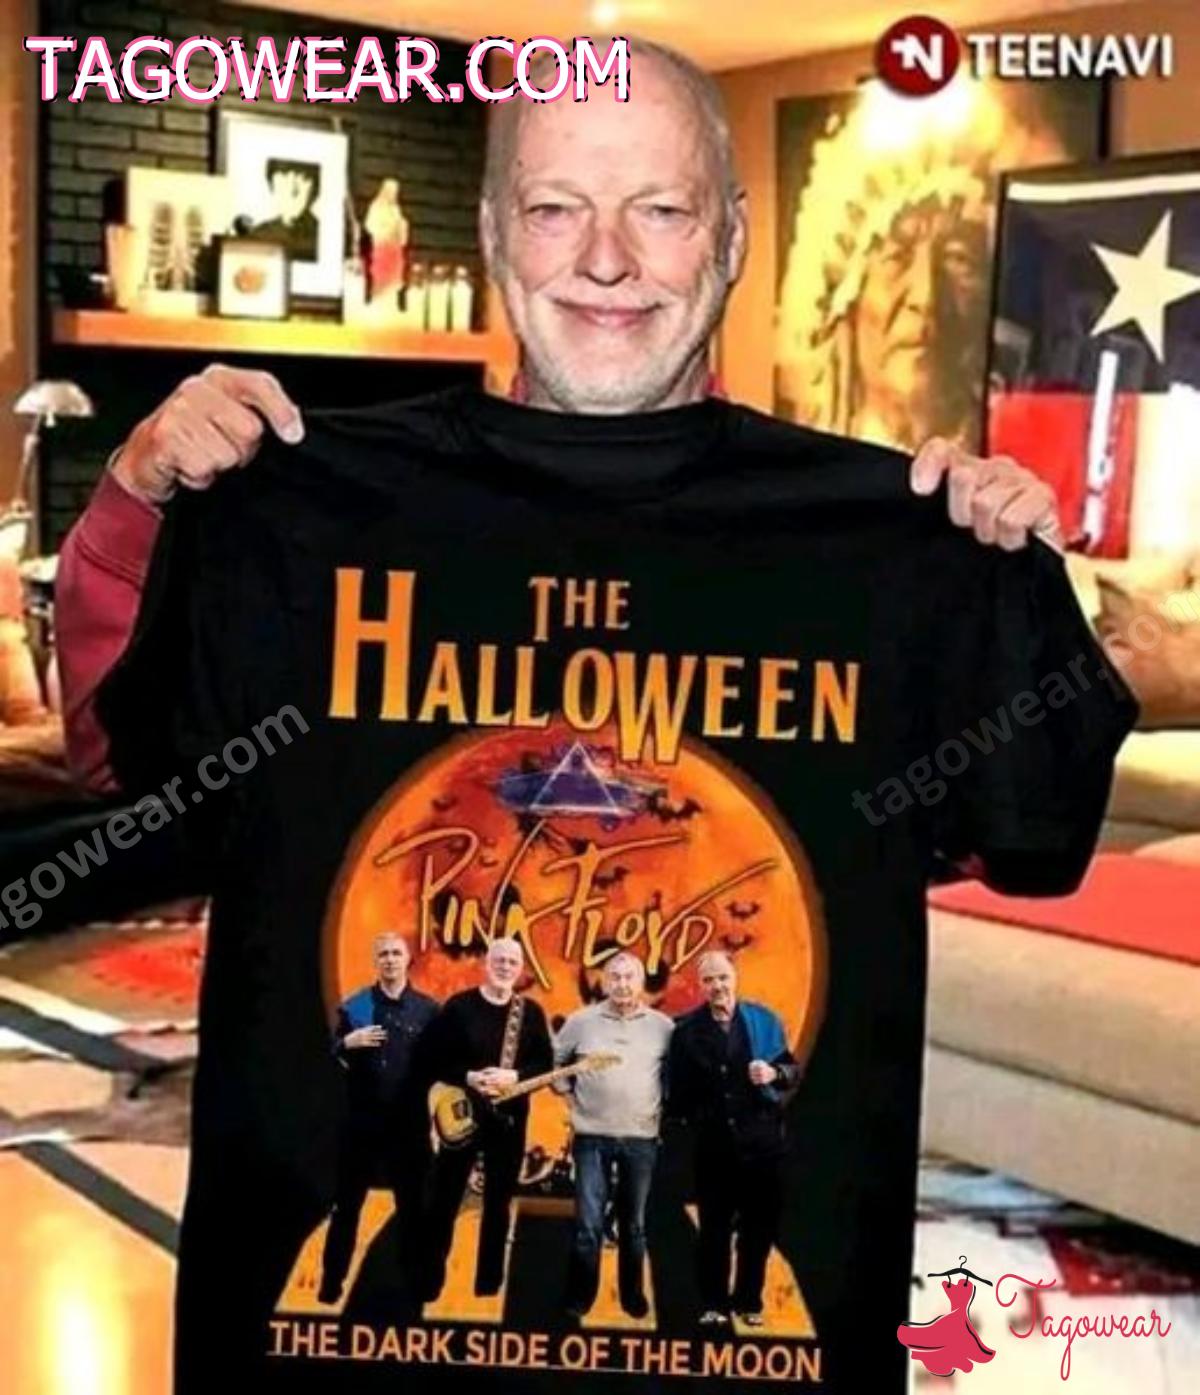 The Halloween Pink Floyd On Road The Dark Side Of The Moon Shirt, Hoodie